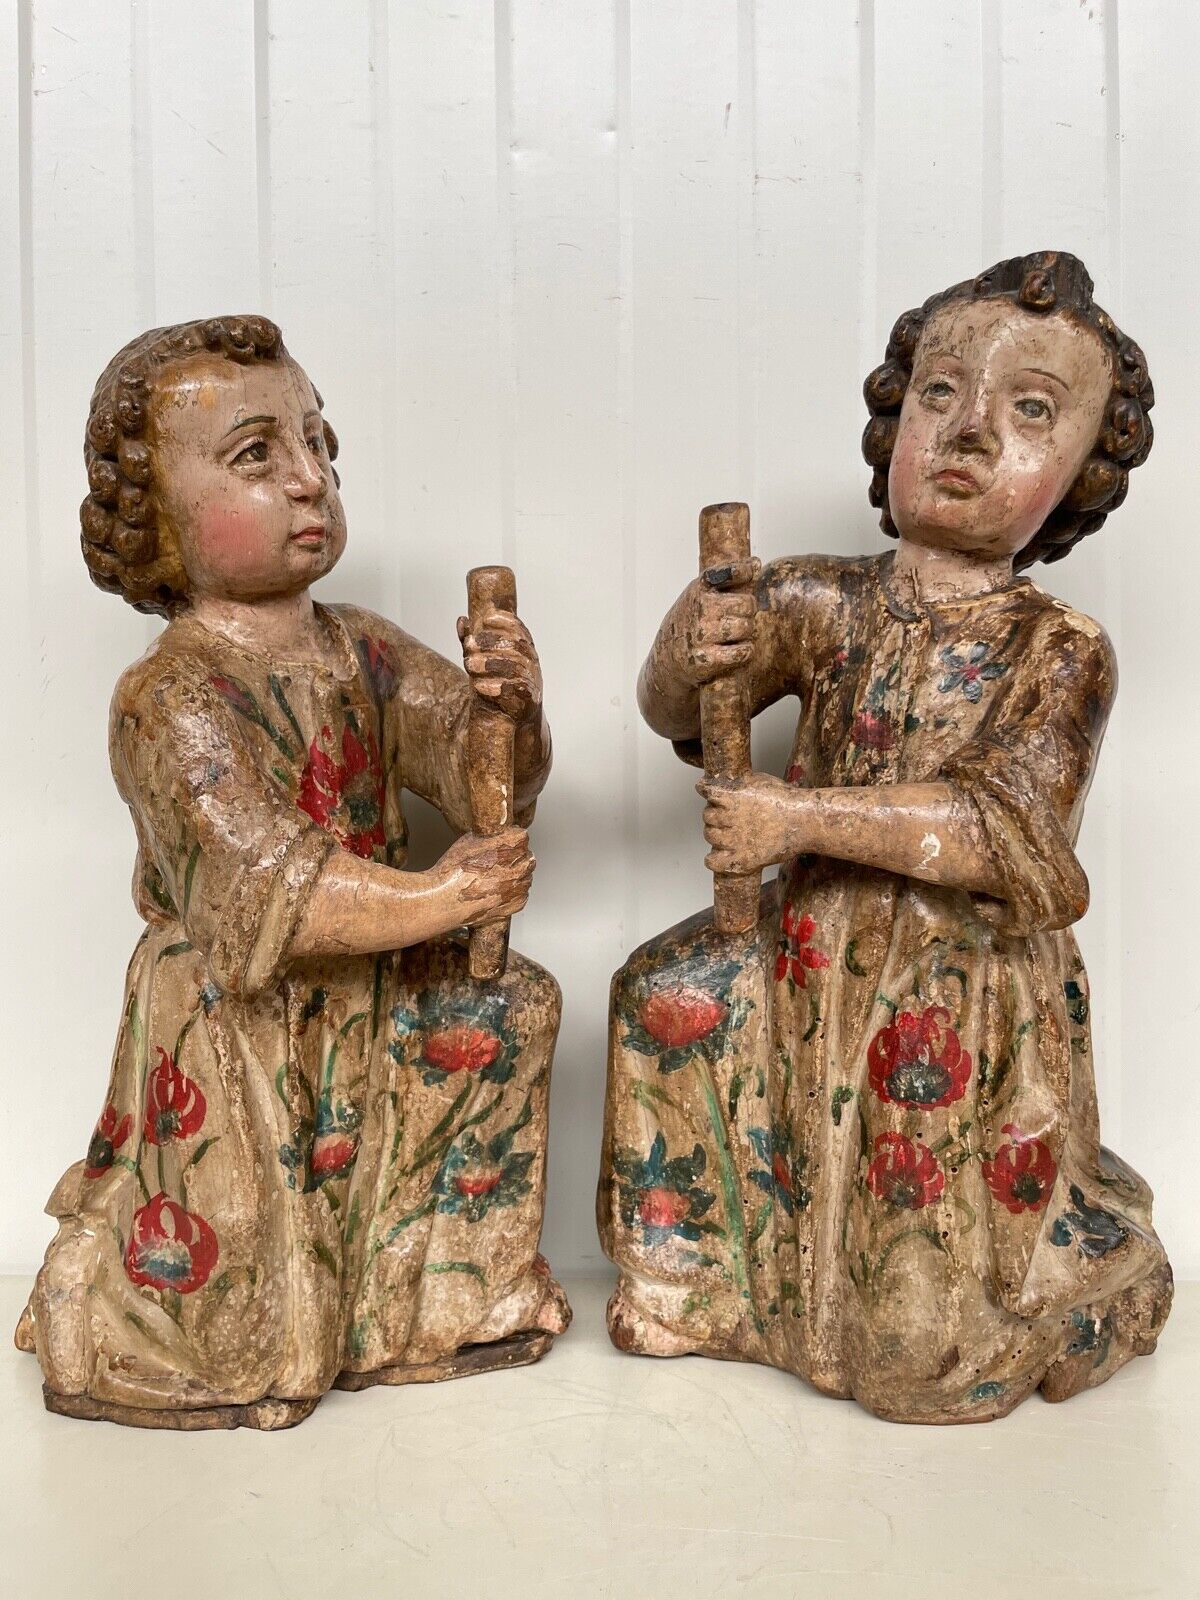 SALE  Exceptional pair of Antique Angels circa 1700